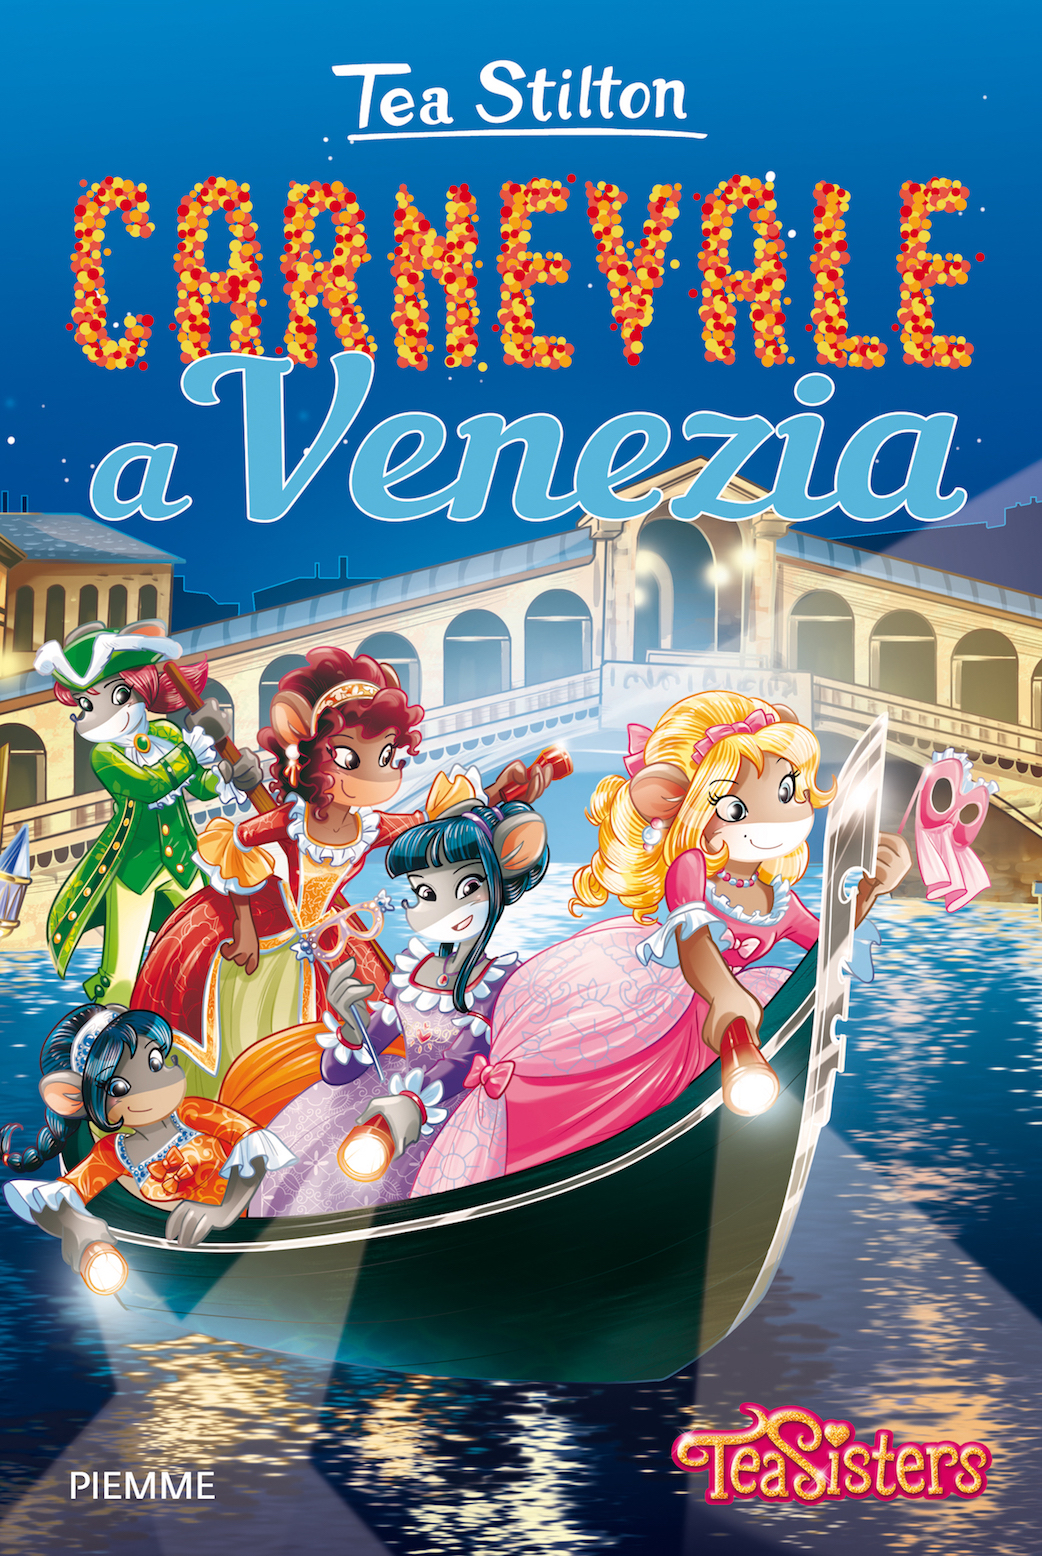 Carnevale a Venezia - LeggendoLeggendo